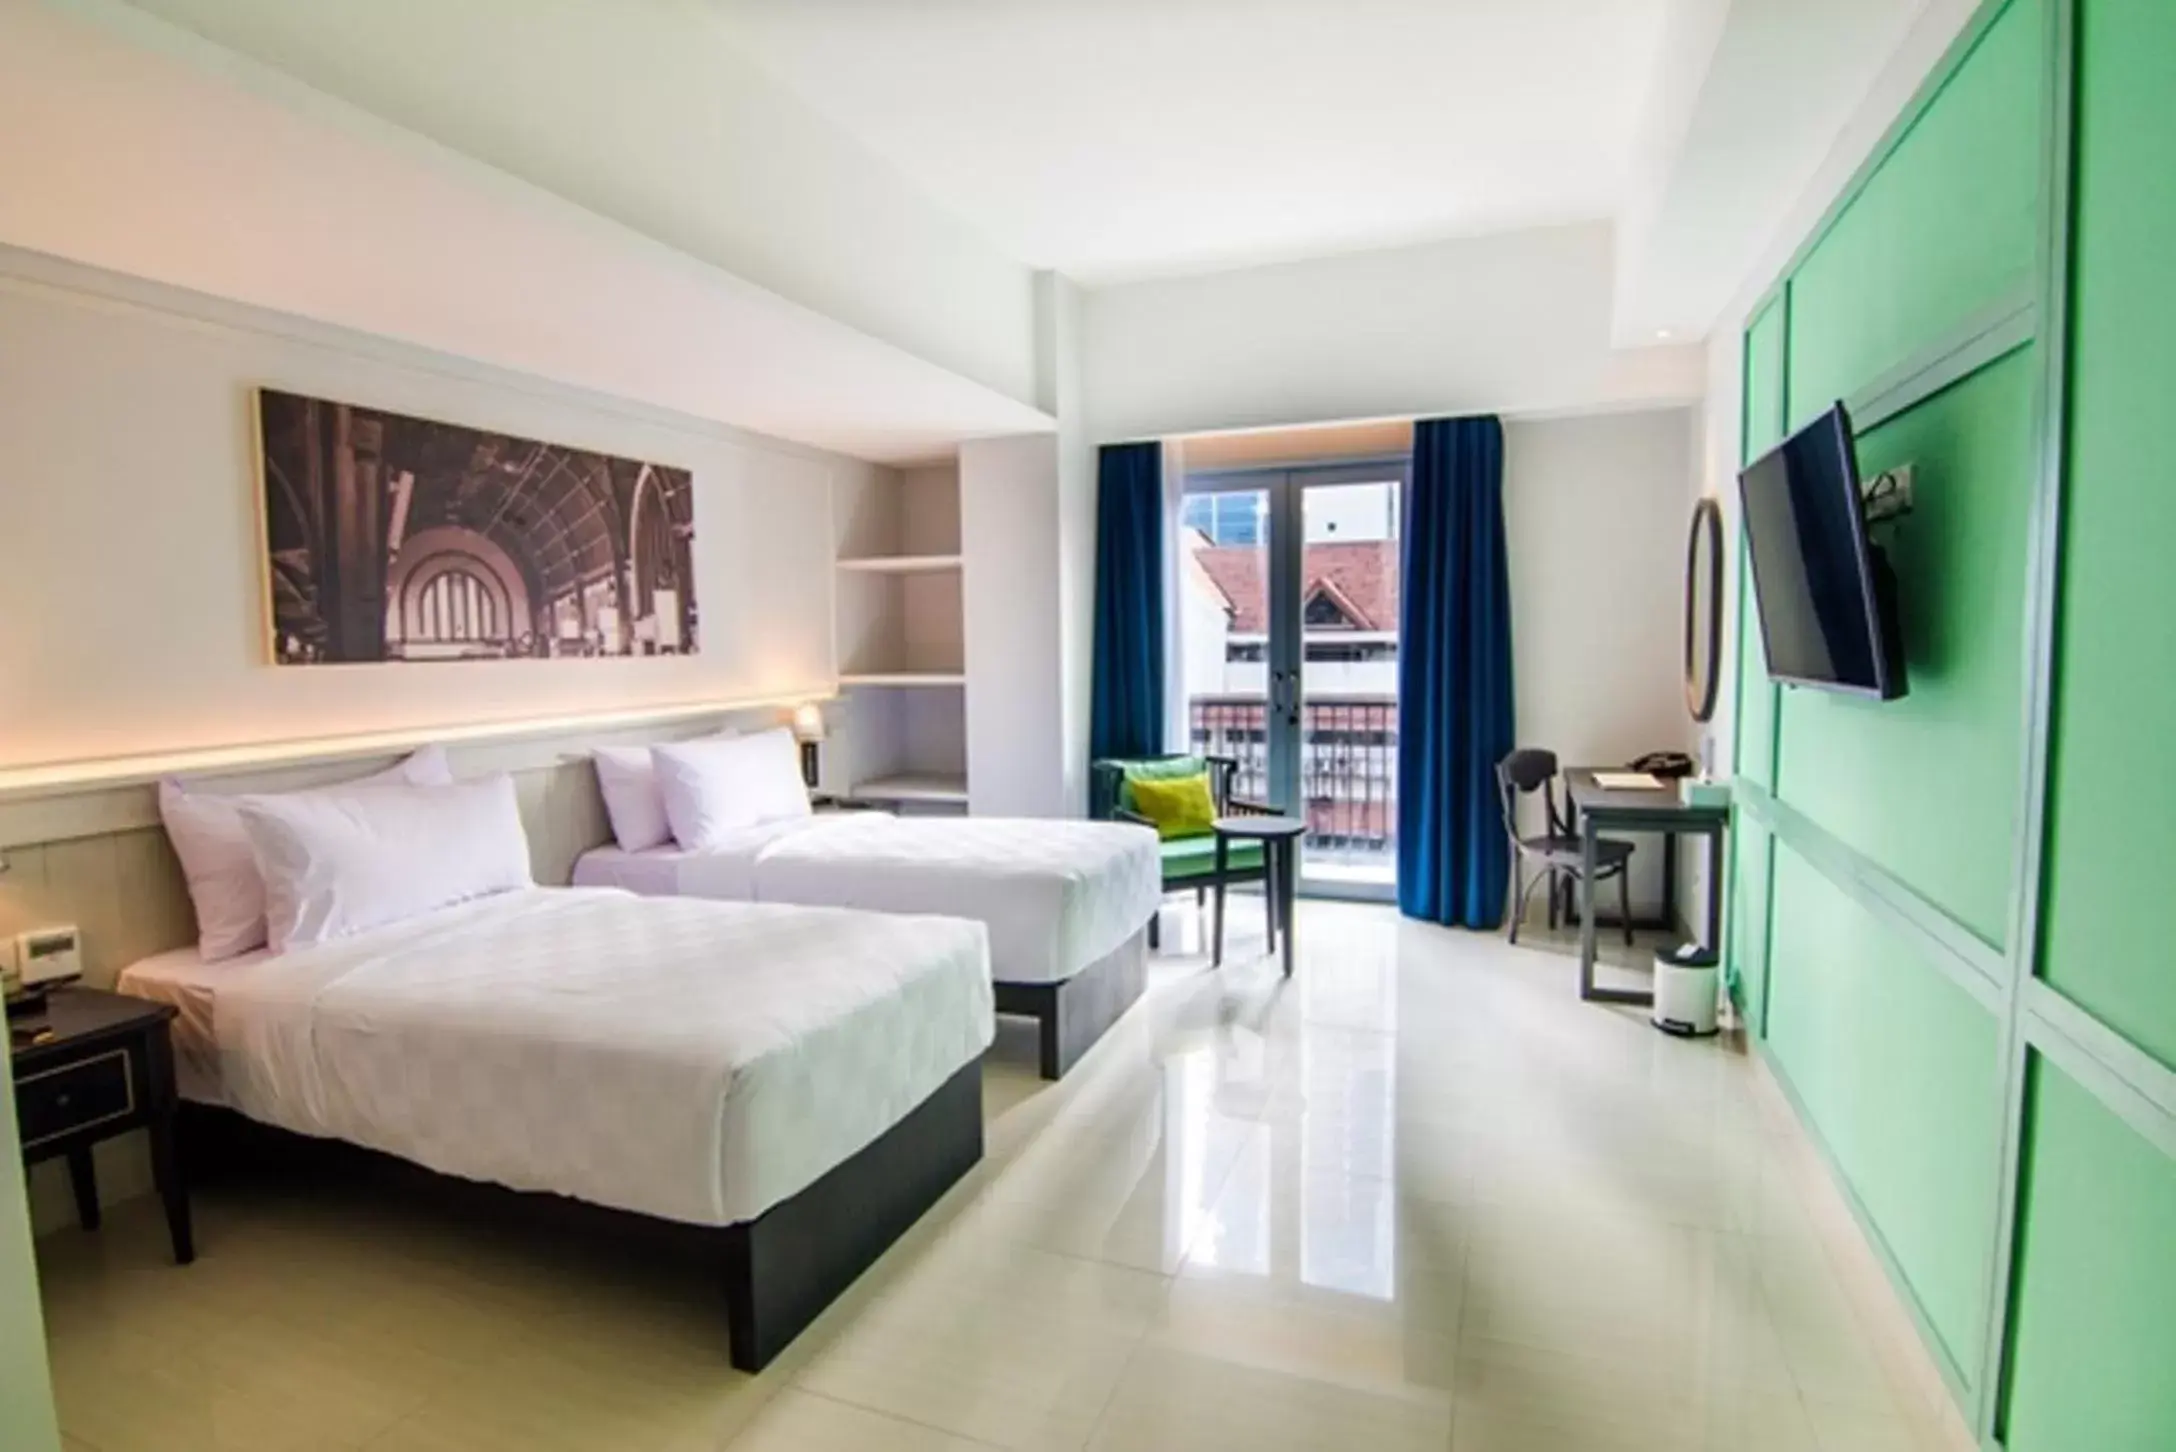 Bedroom in Jambuluwuk Thamrin Hotel